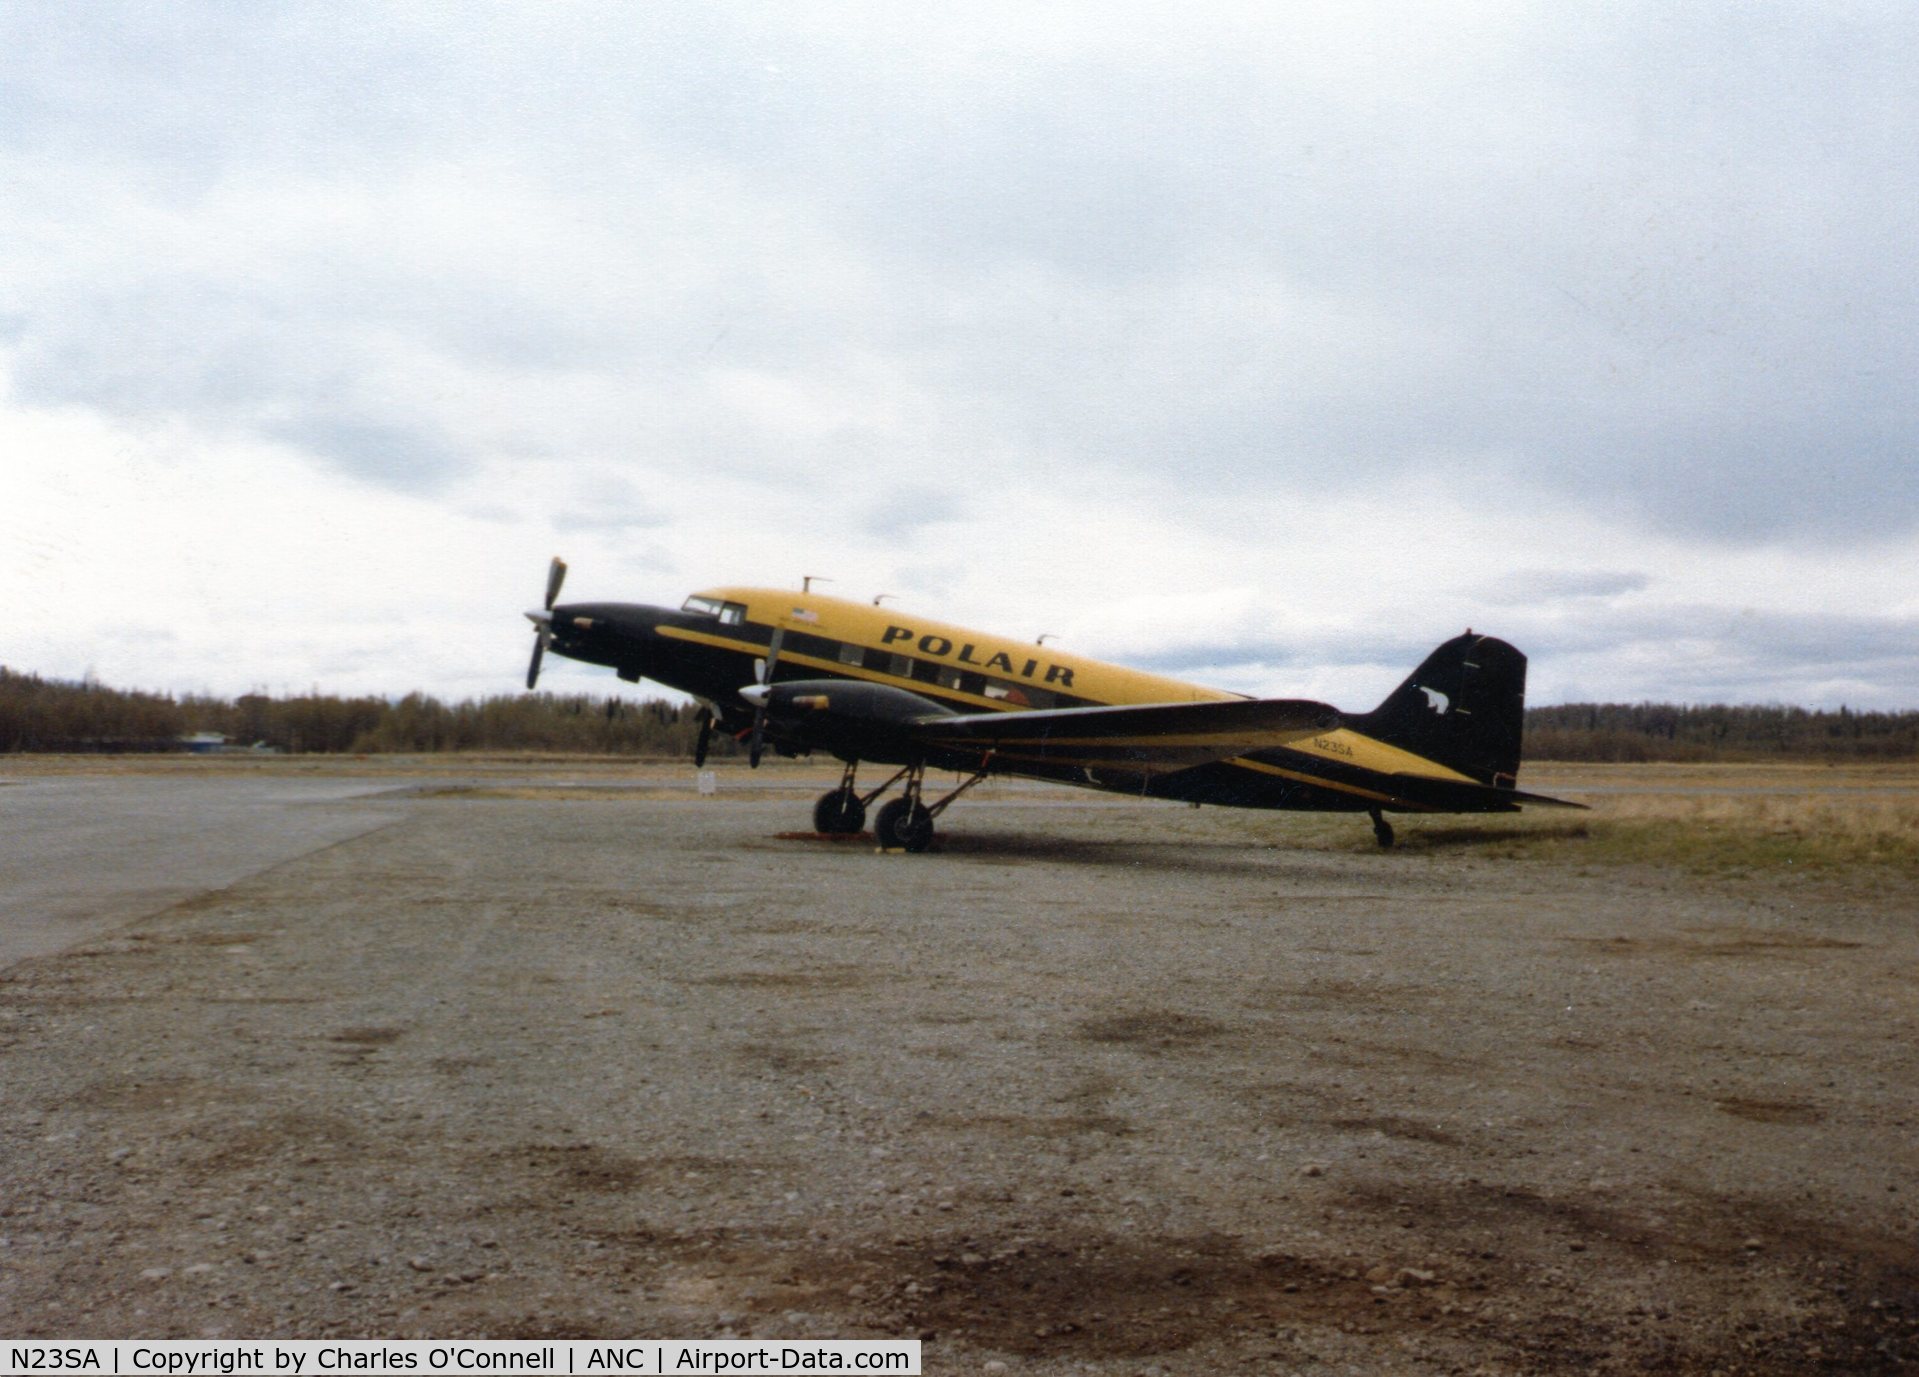 N23SA, 1942 Conroy (Douglas) Tri Turbo Three (DC-3A-S1C3G) C/N 4903, N nbr visable on tail section.